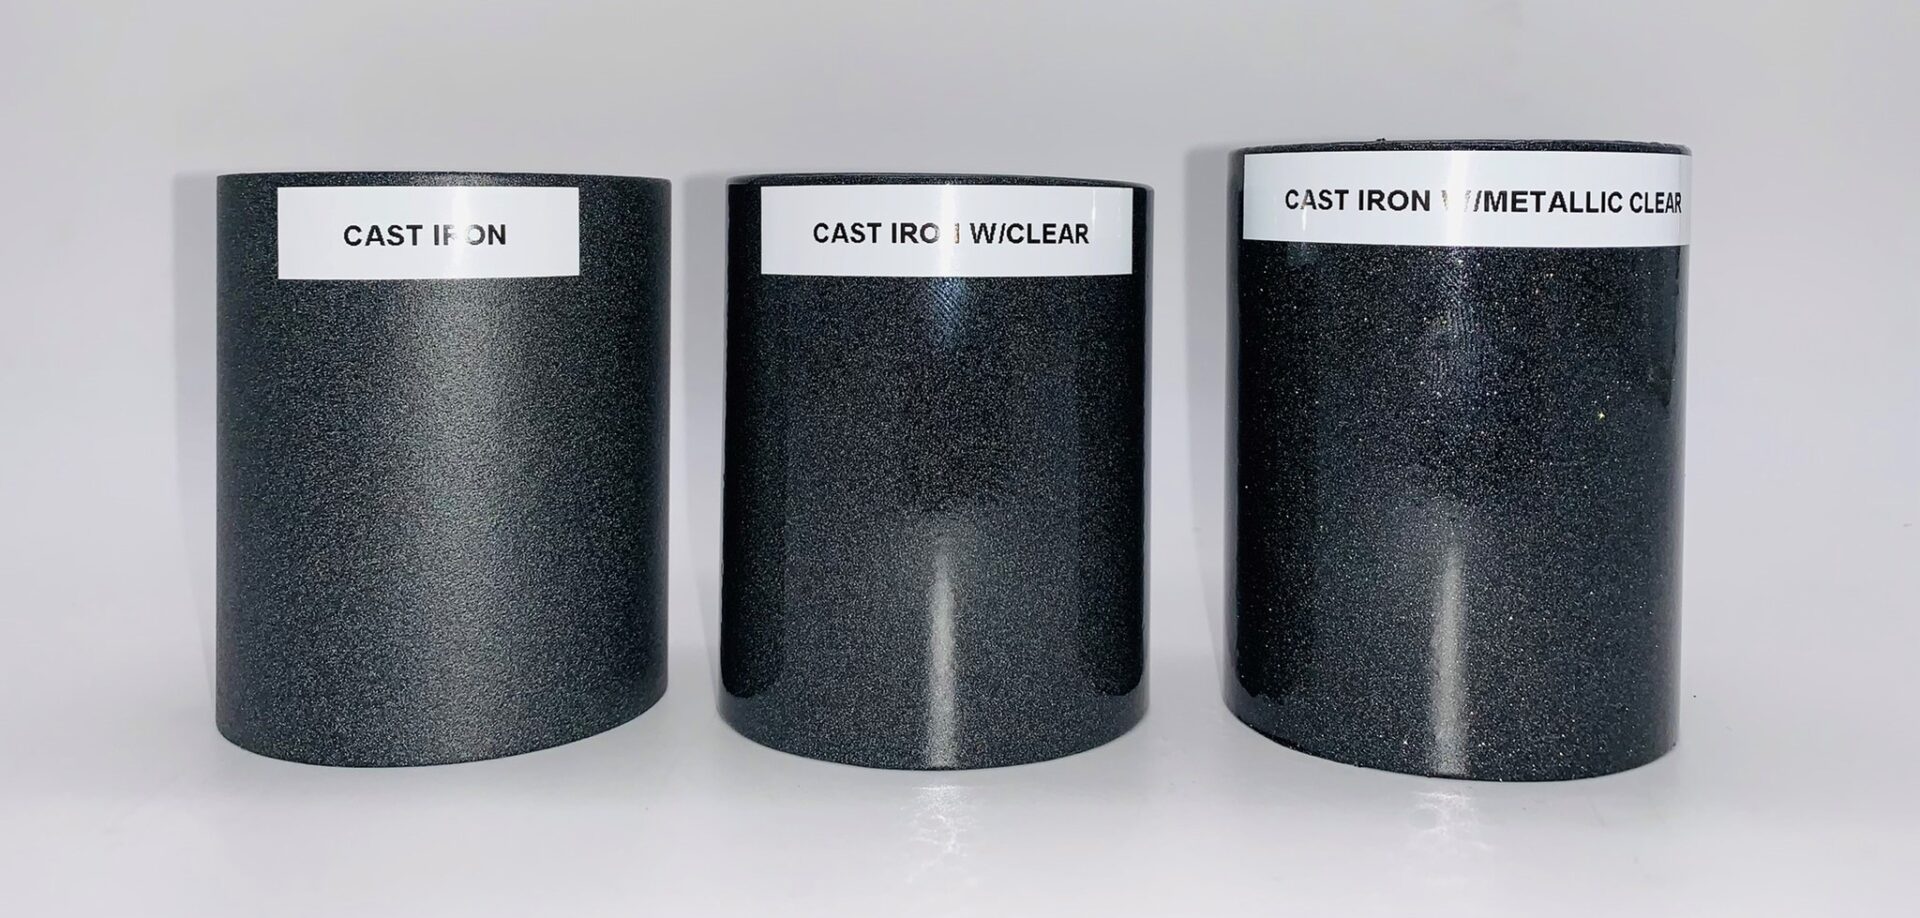 A set of three cast iron metallic clear parts